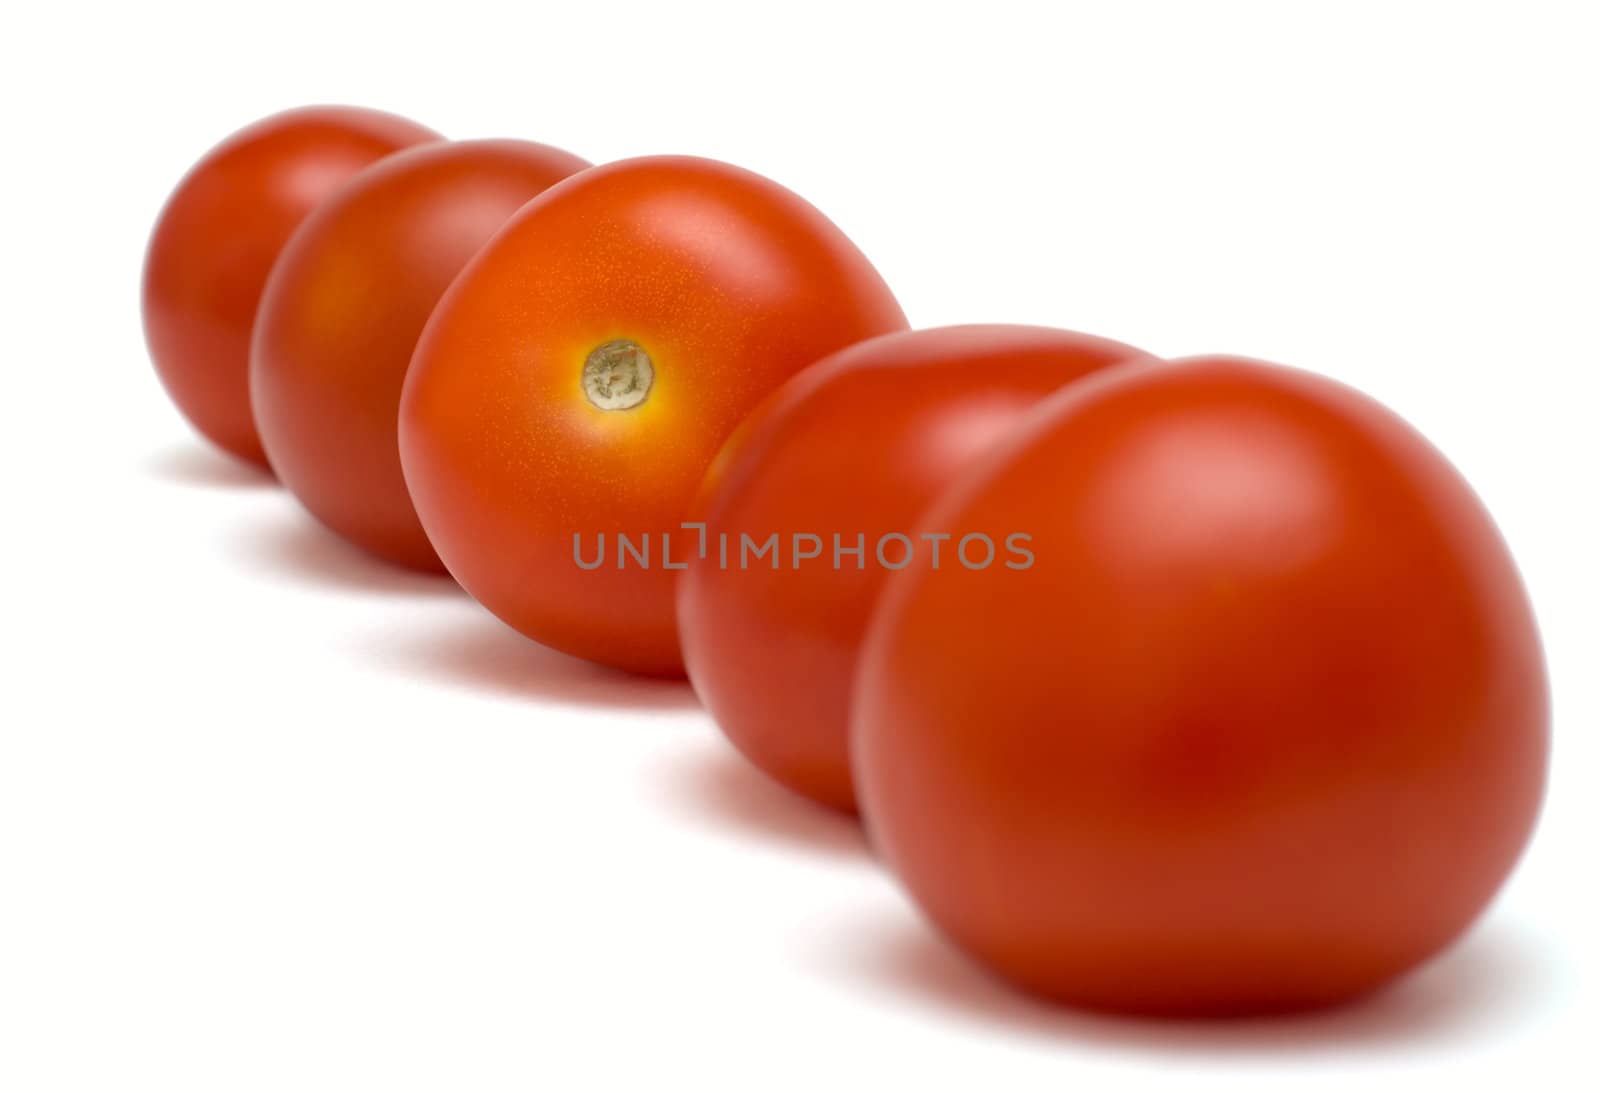 Pry tomato by kzen